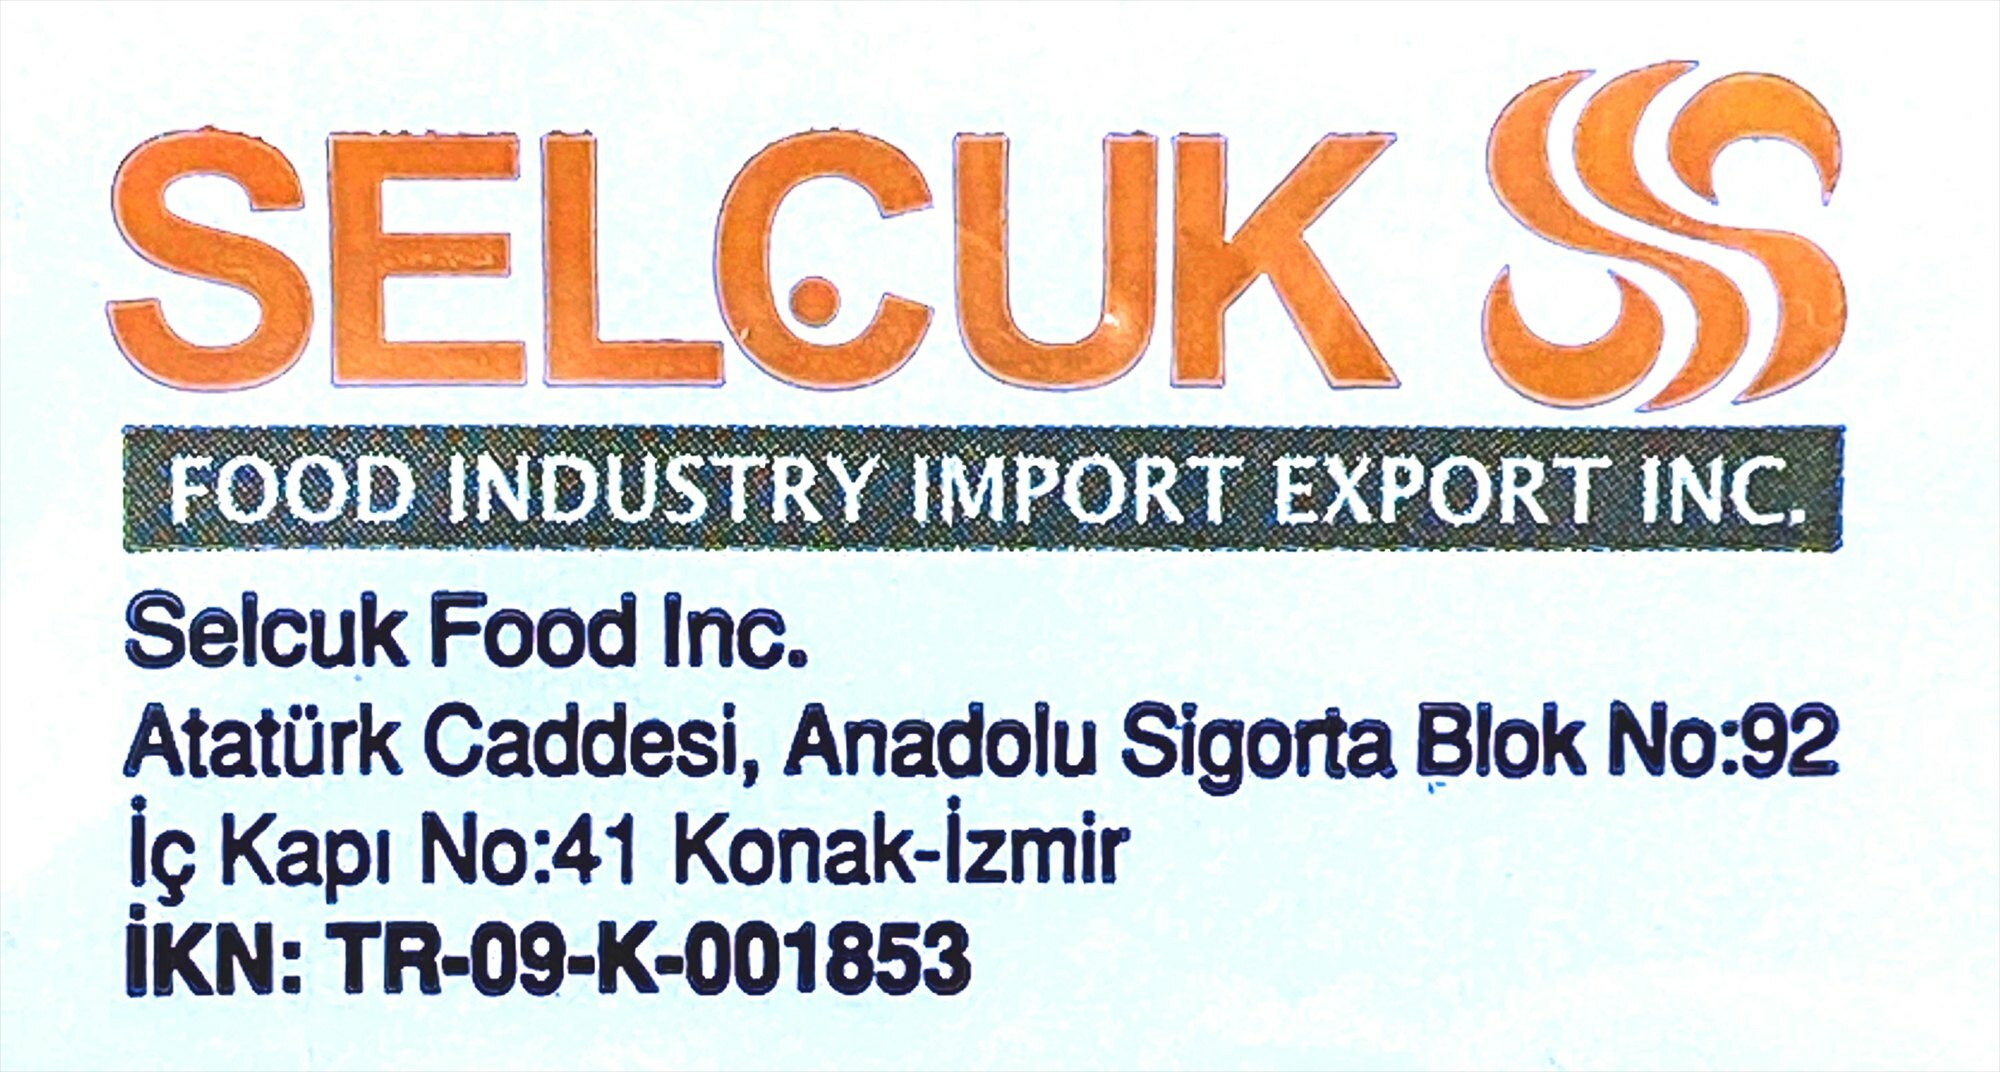 Selcuk Food Inc.